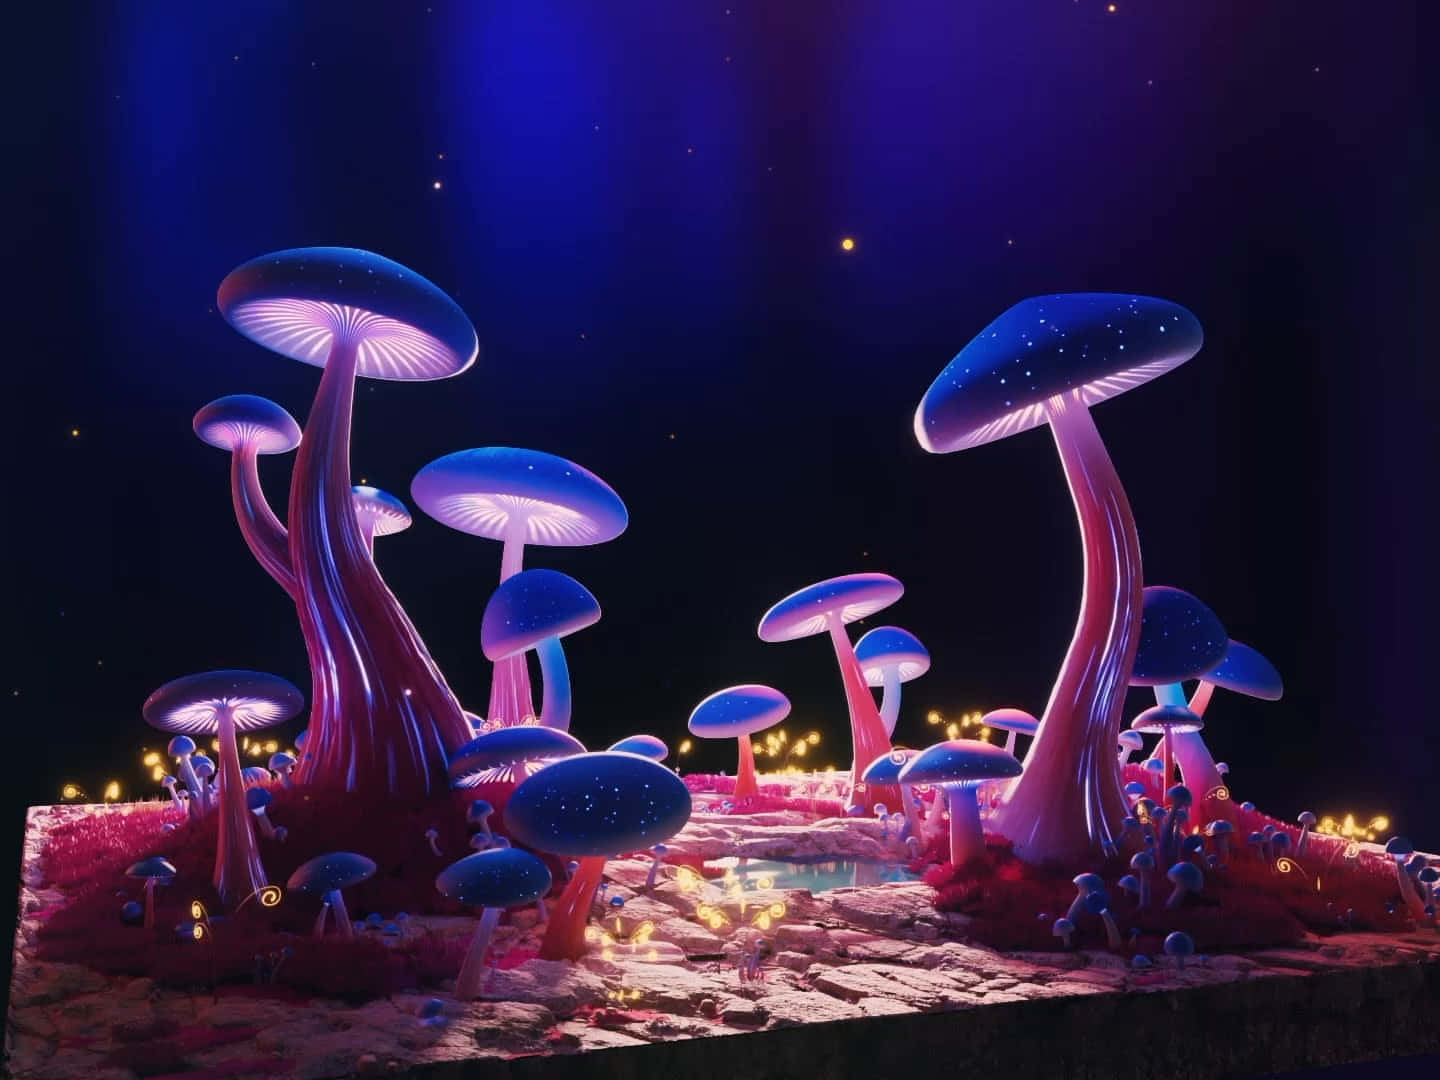 Enchanted Glowing Mushroom Forest Wallpaper